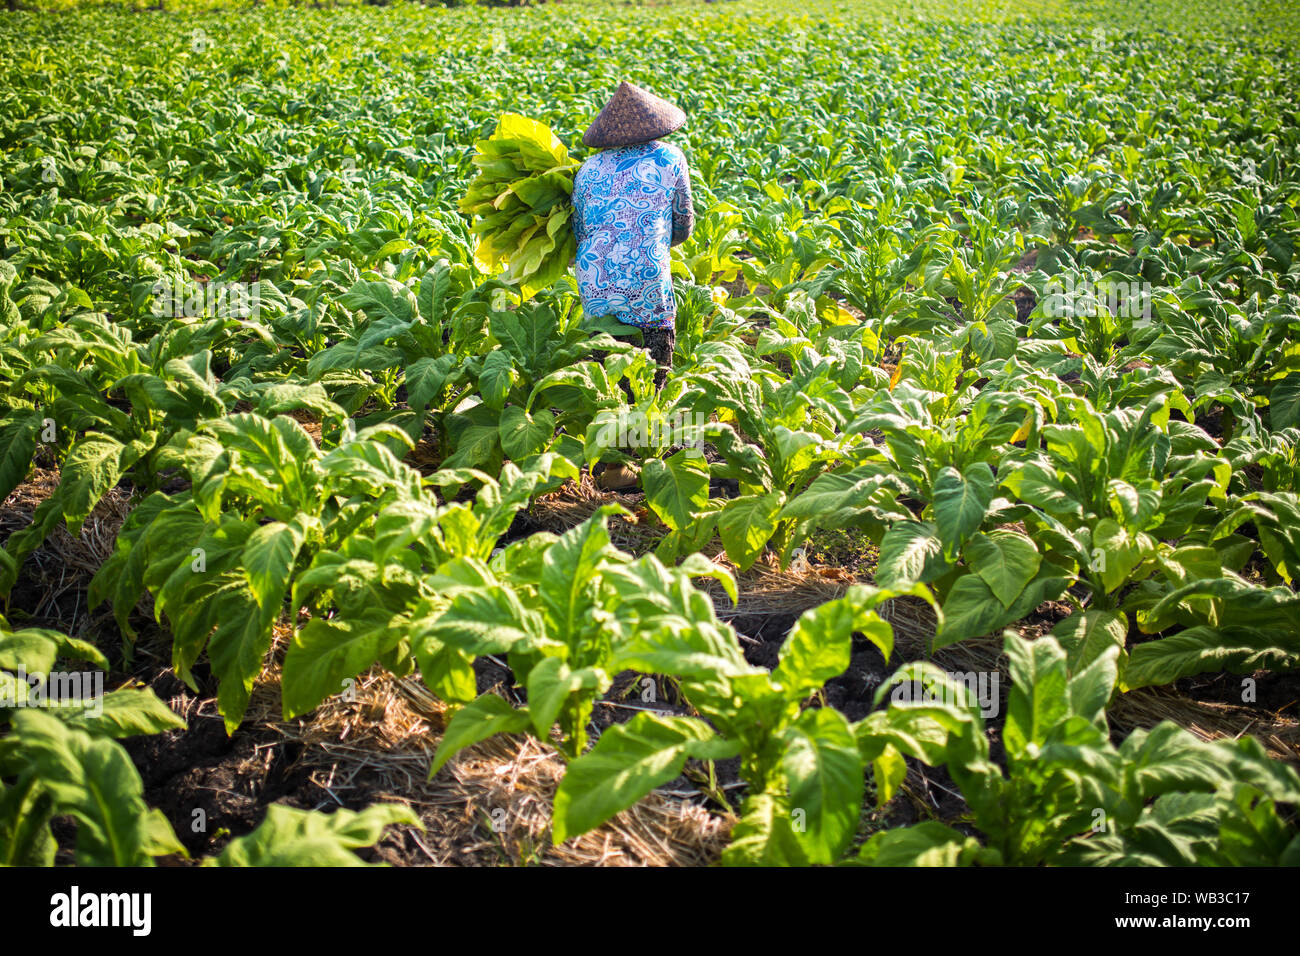 People working on tobacco farm on Lombok island, Indonesia. Stock Photo